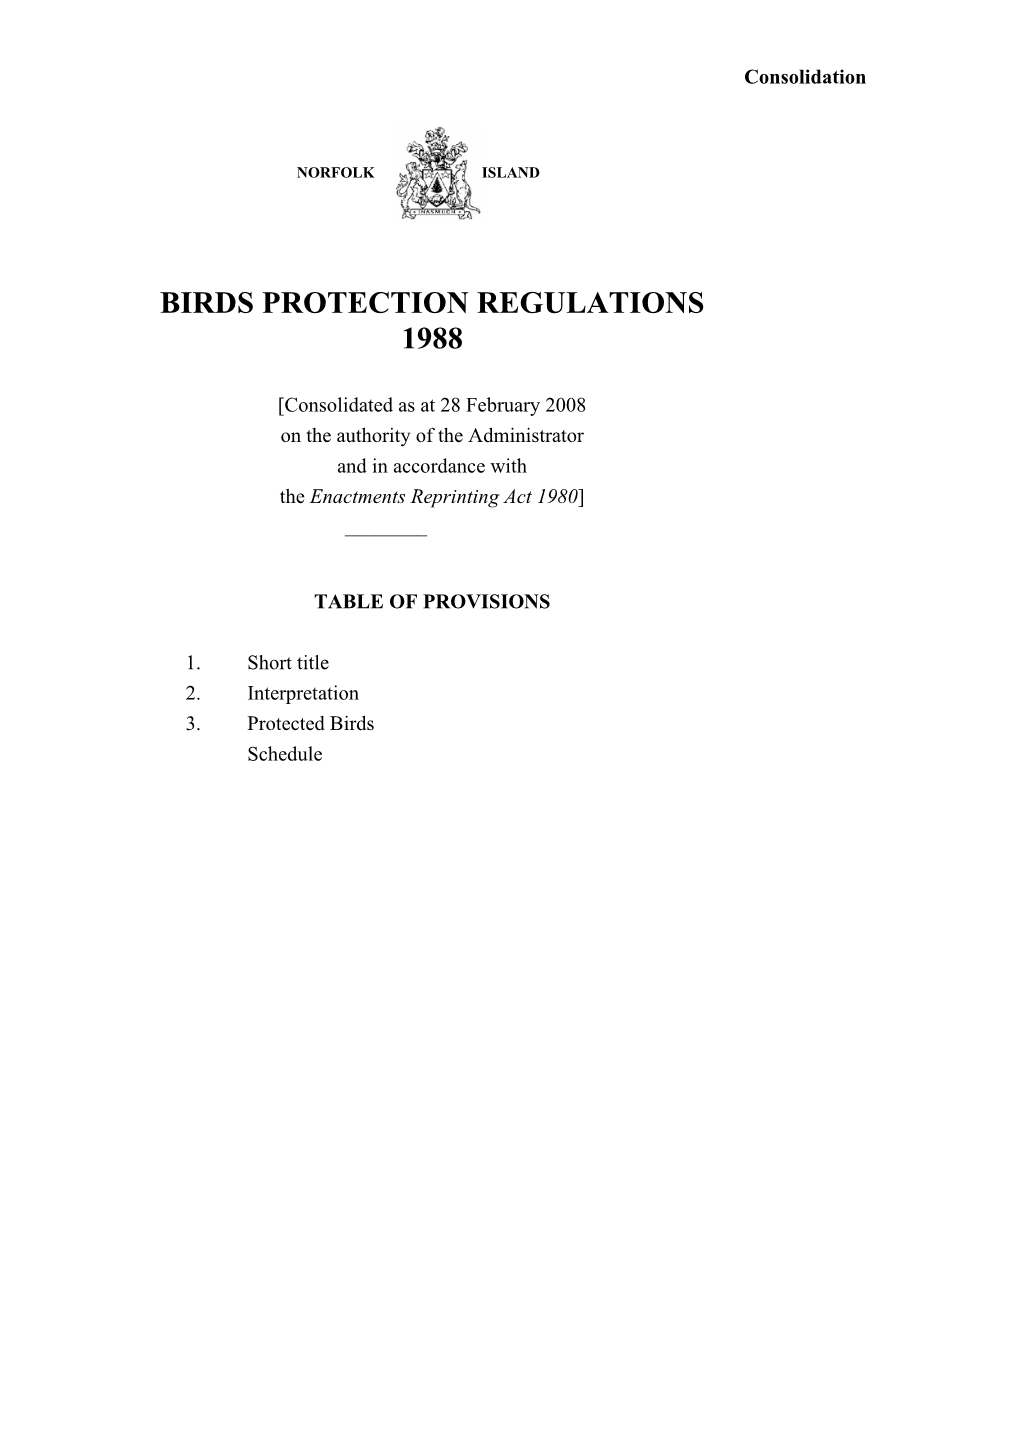 Birds Protection Regulations 1988